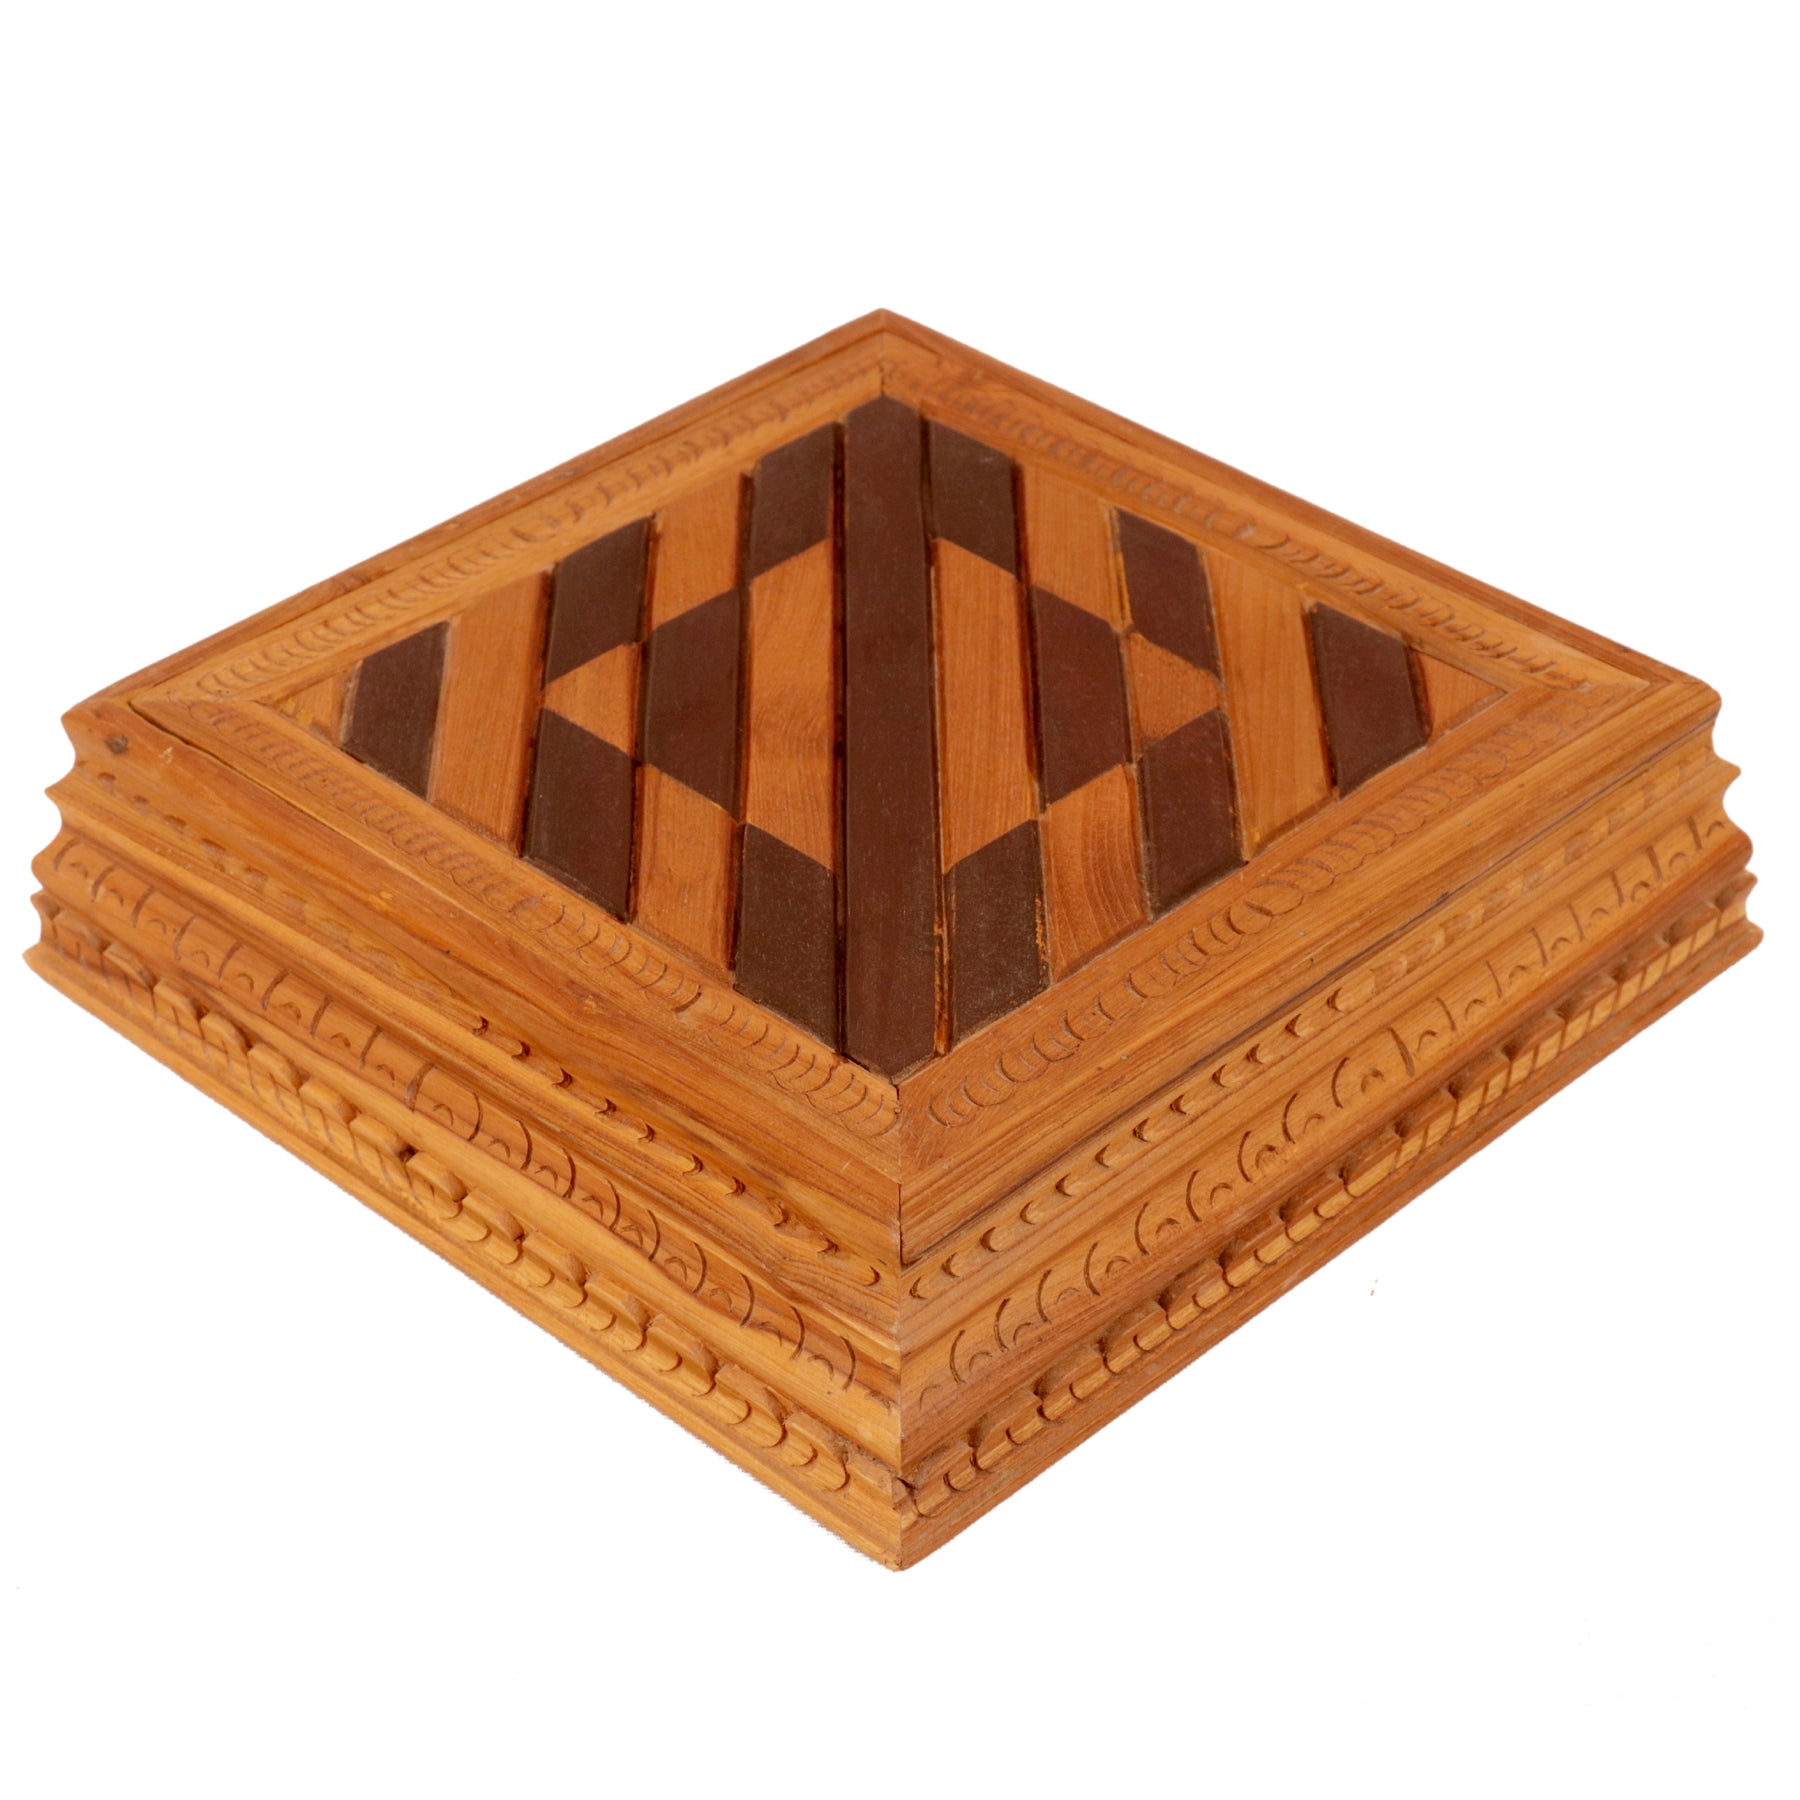 Abstract Art Box Wooden Box